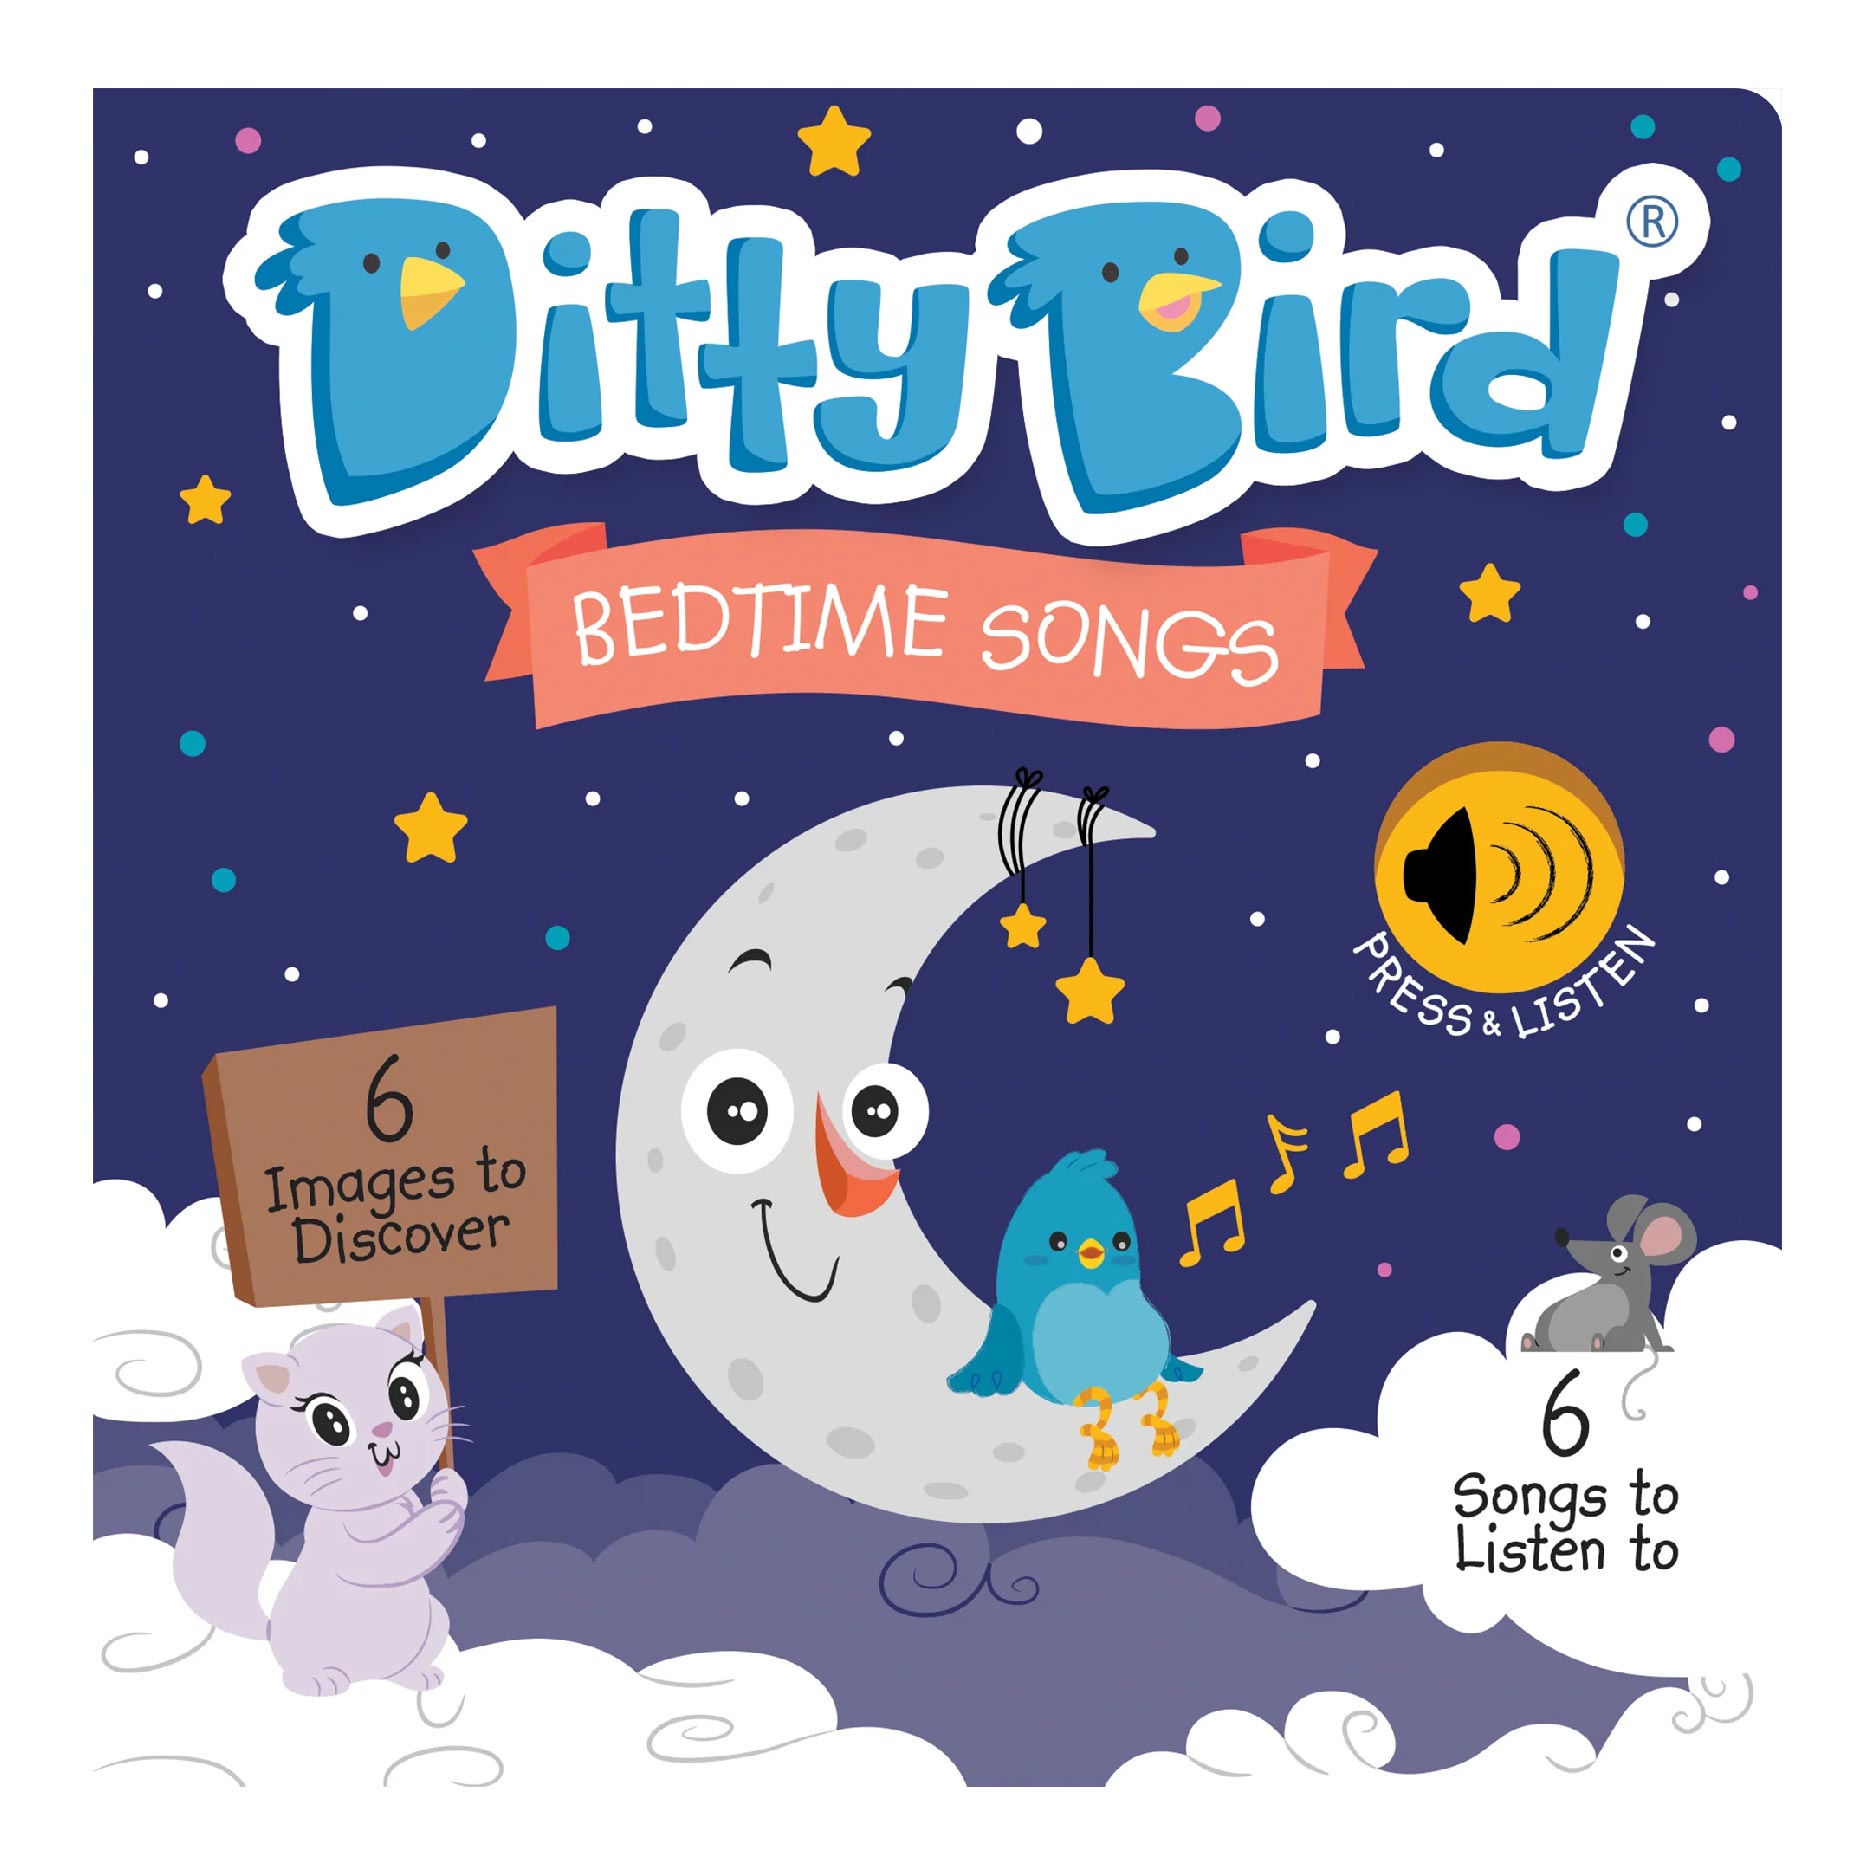 Ditty Bird bedtime Songs